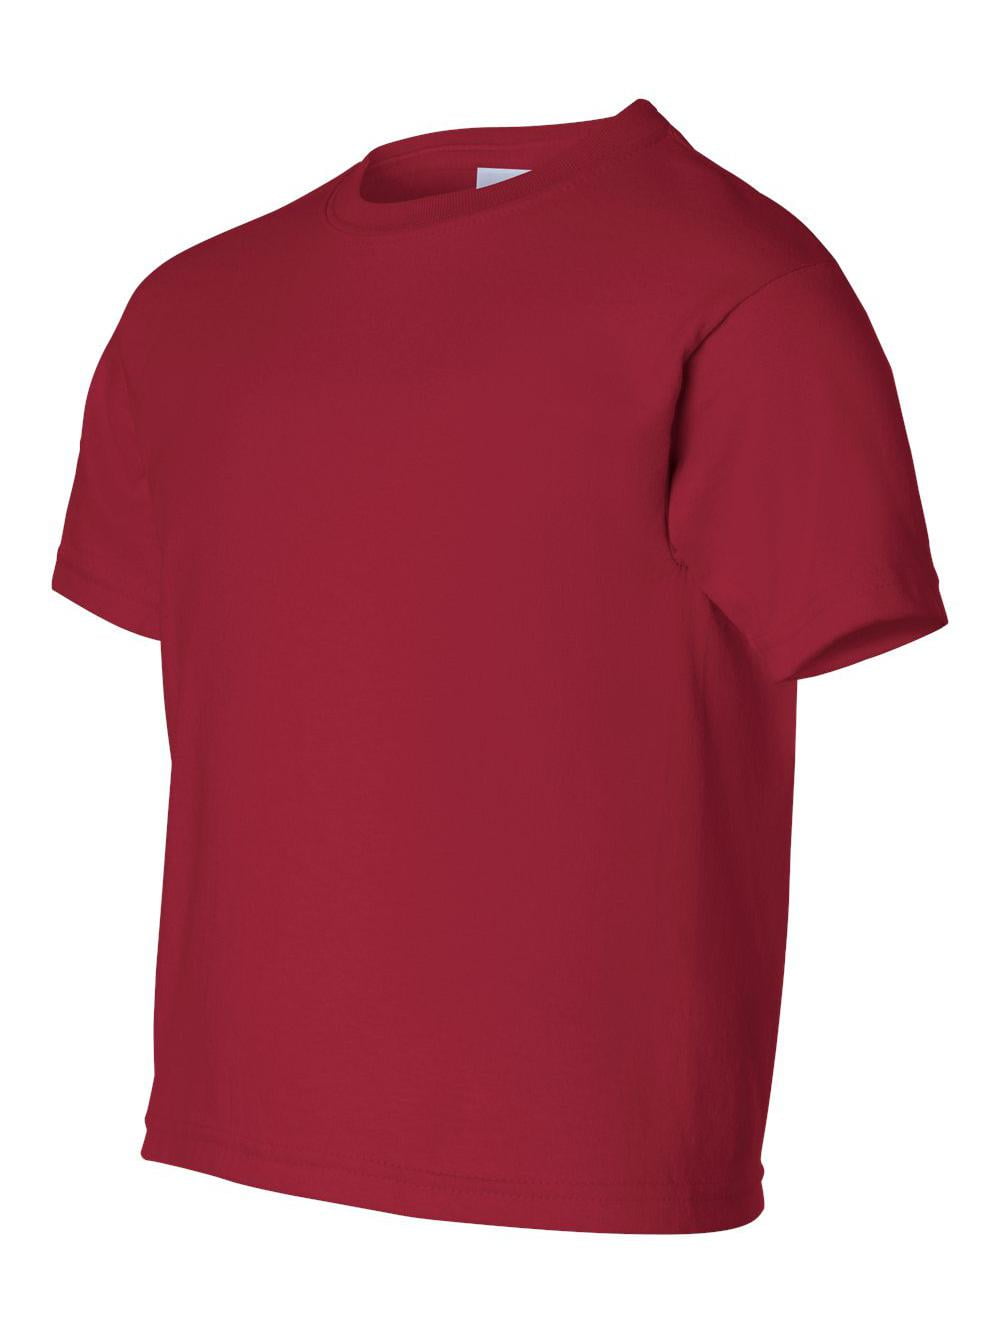 Cardinal Cotton Size: - - 2000B Red - S Ultra T-Shirt Gildan - Youth